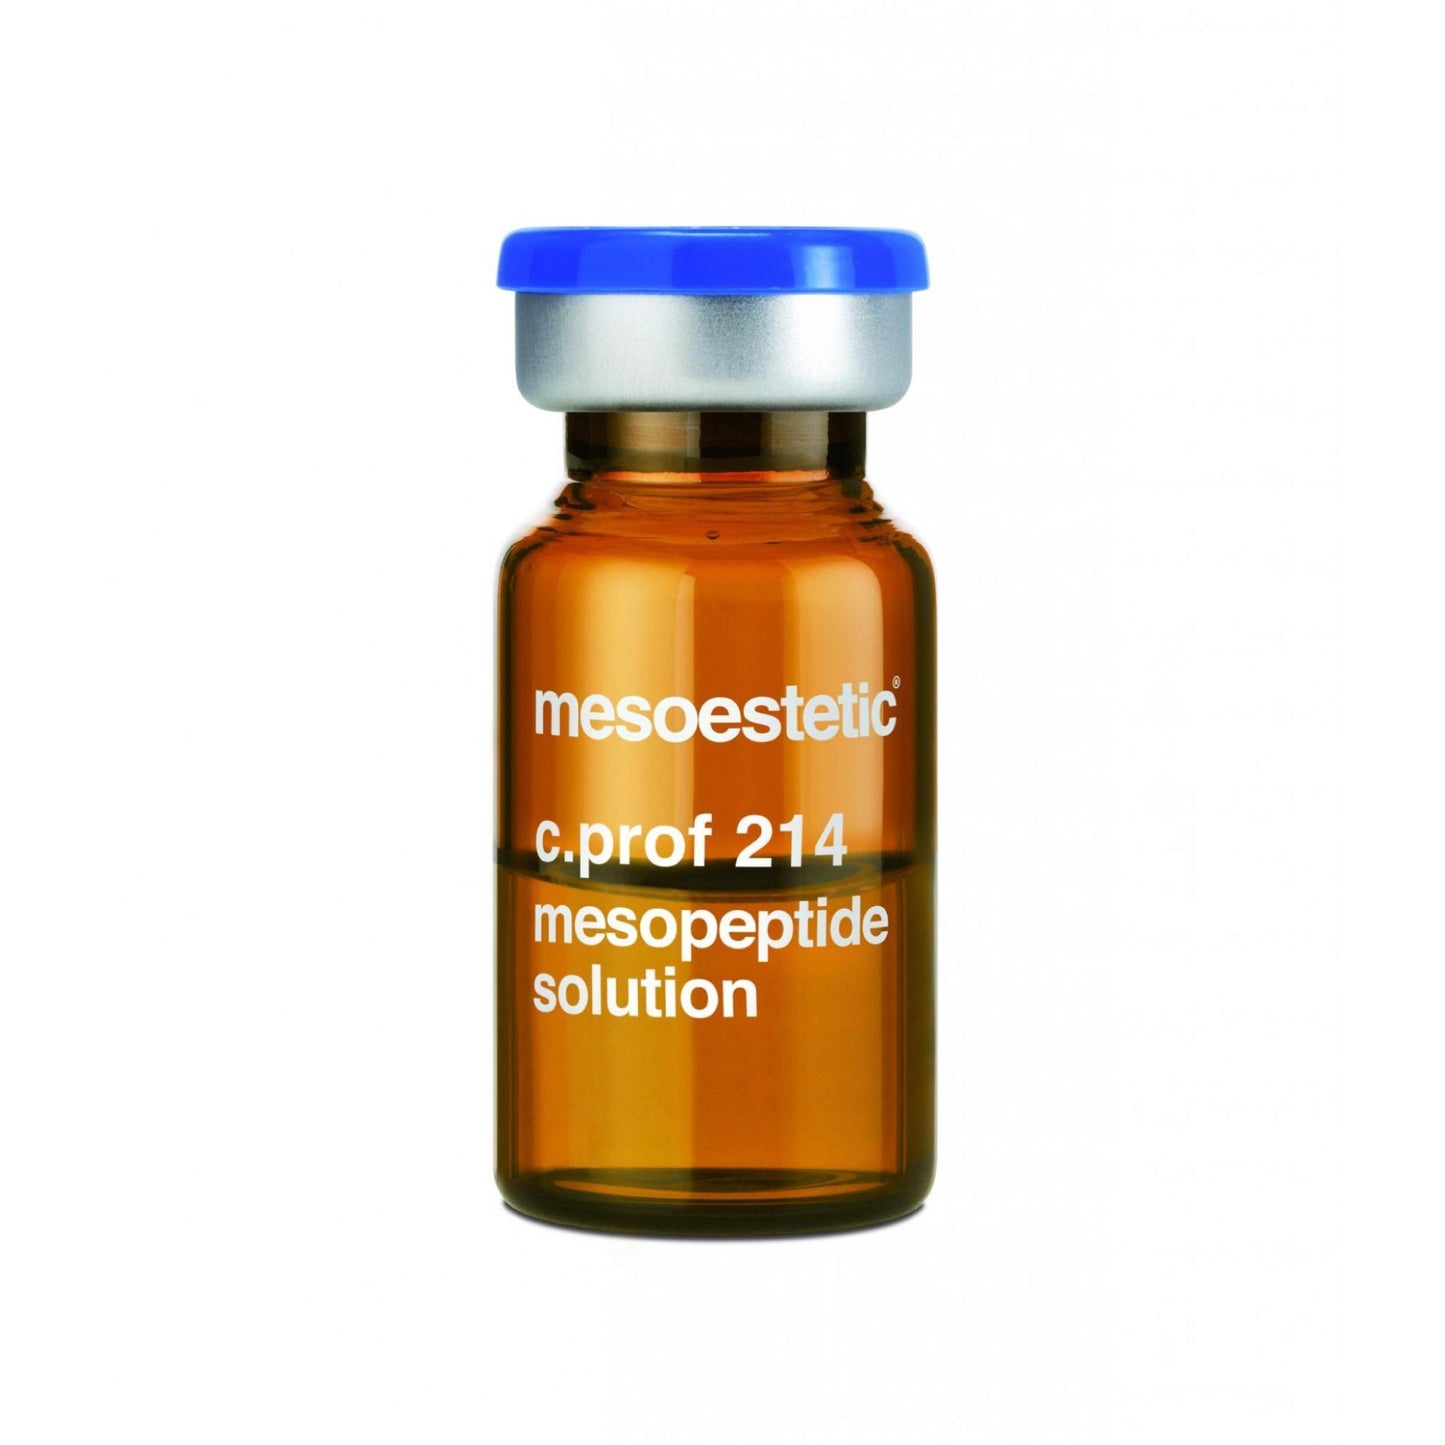 c.prof 214 mesopeptide solution